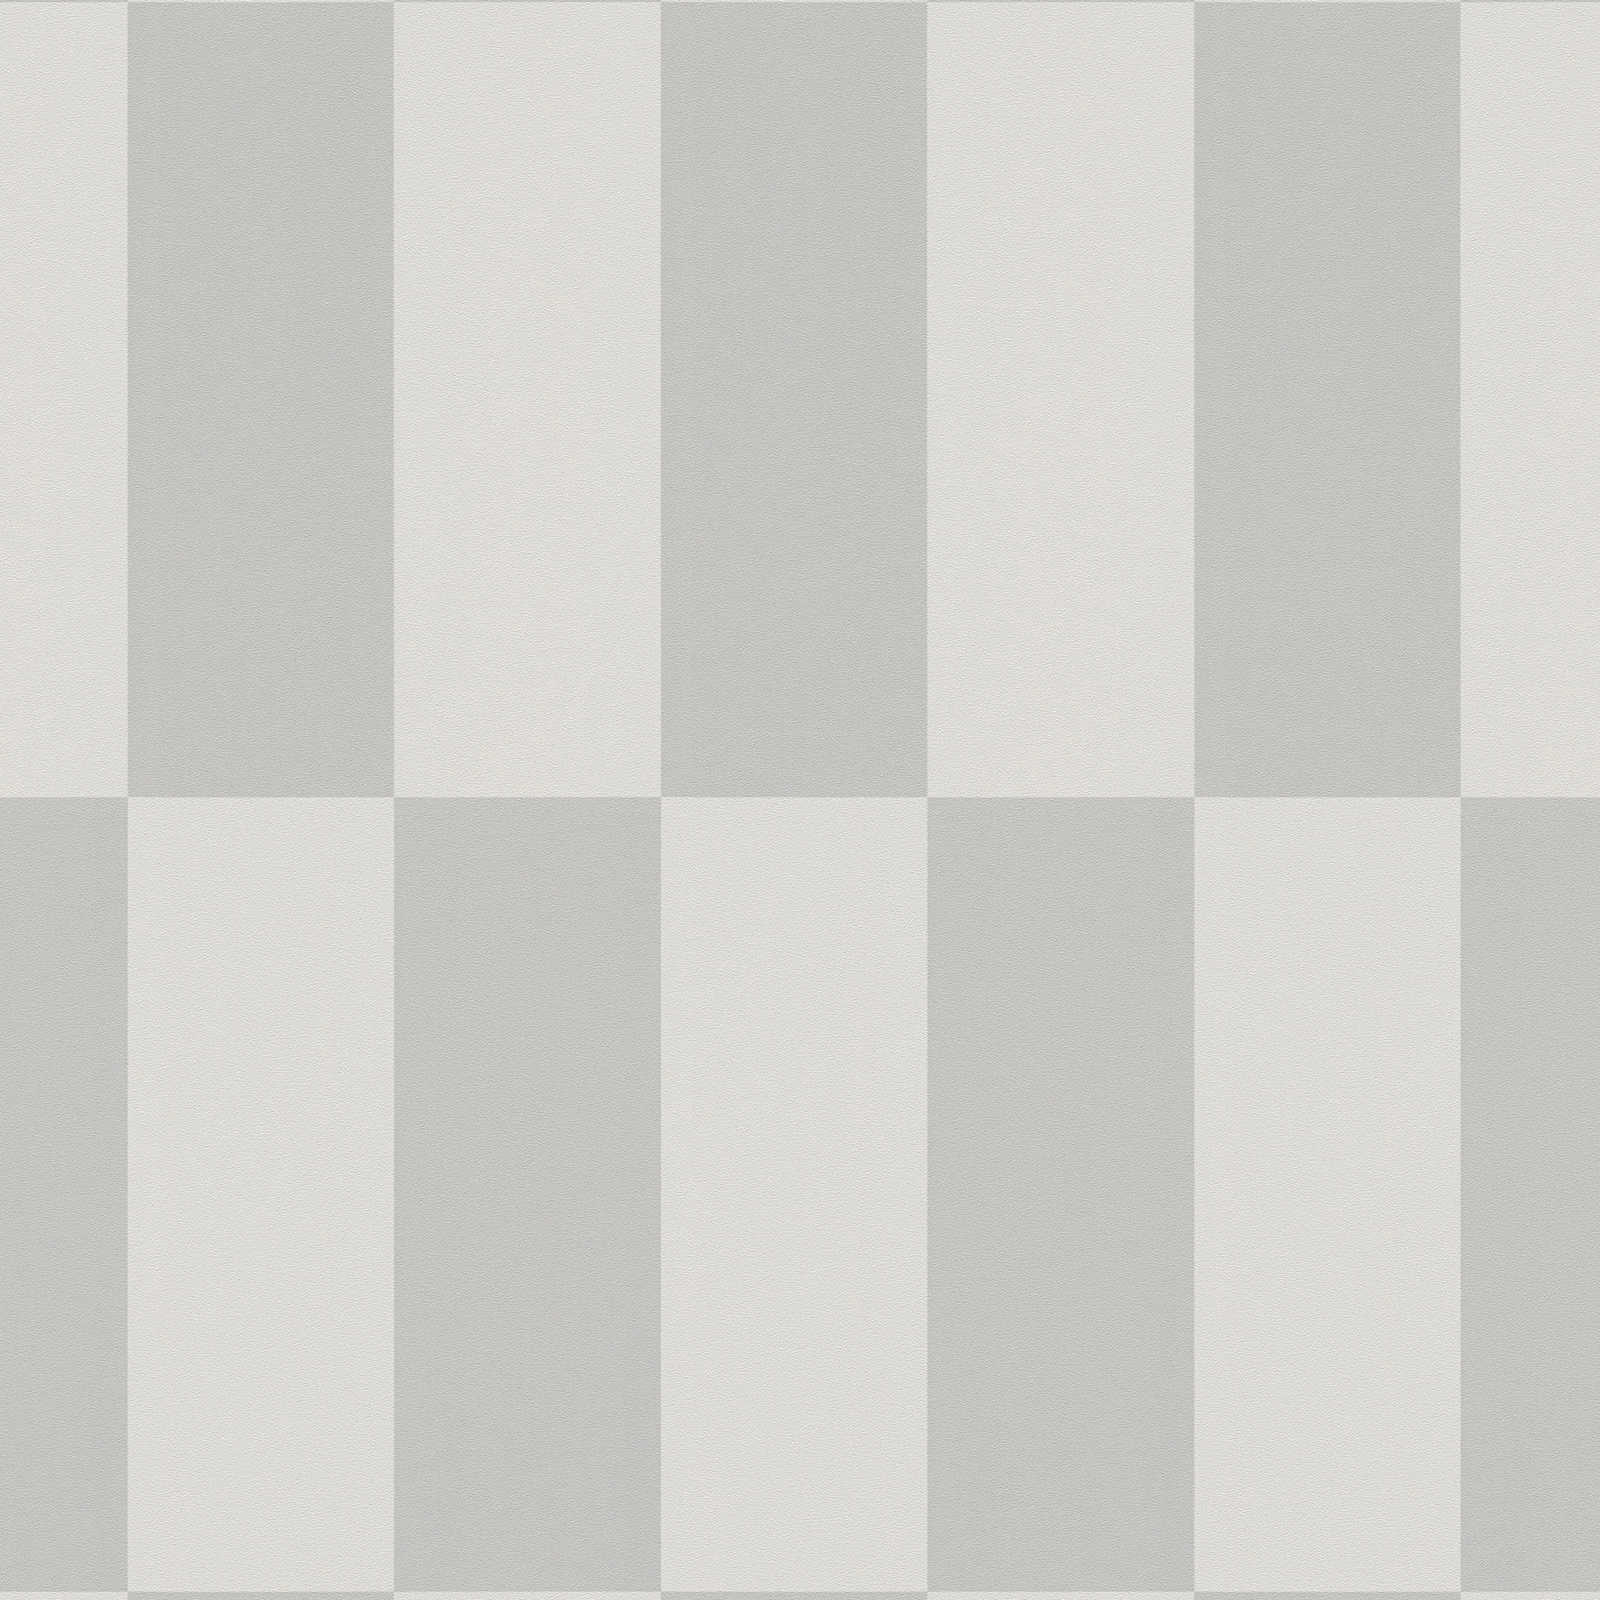             Papel pintado no tejido con motivo gráfico cuadrado - gris
        